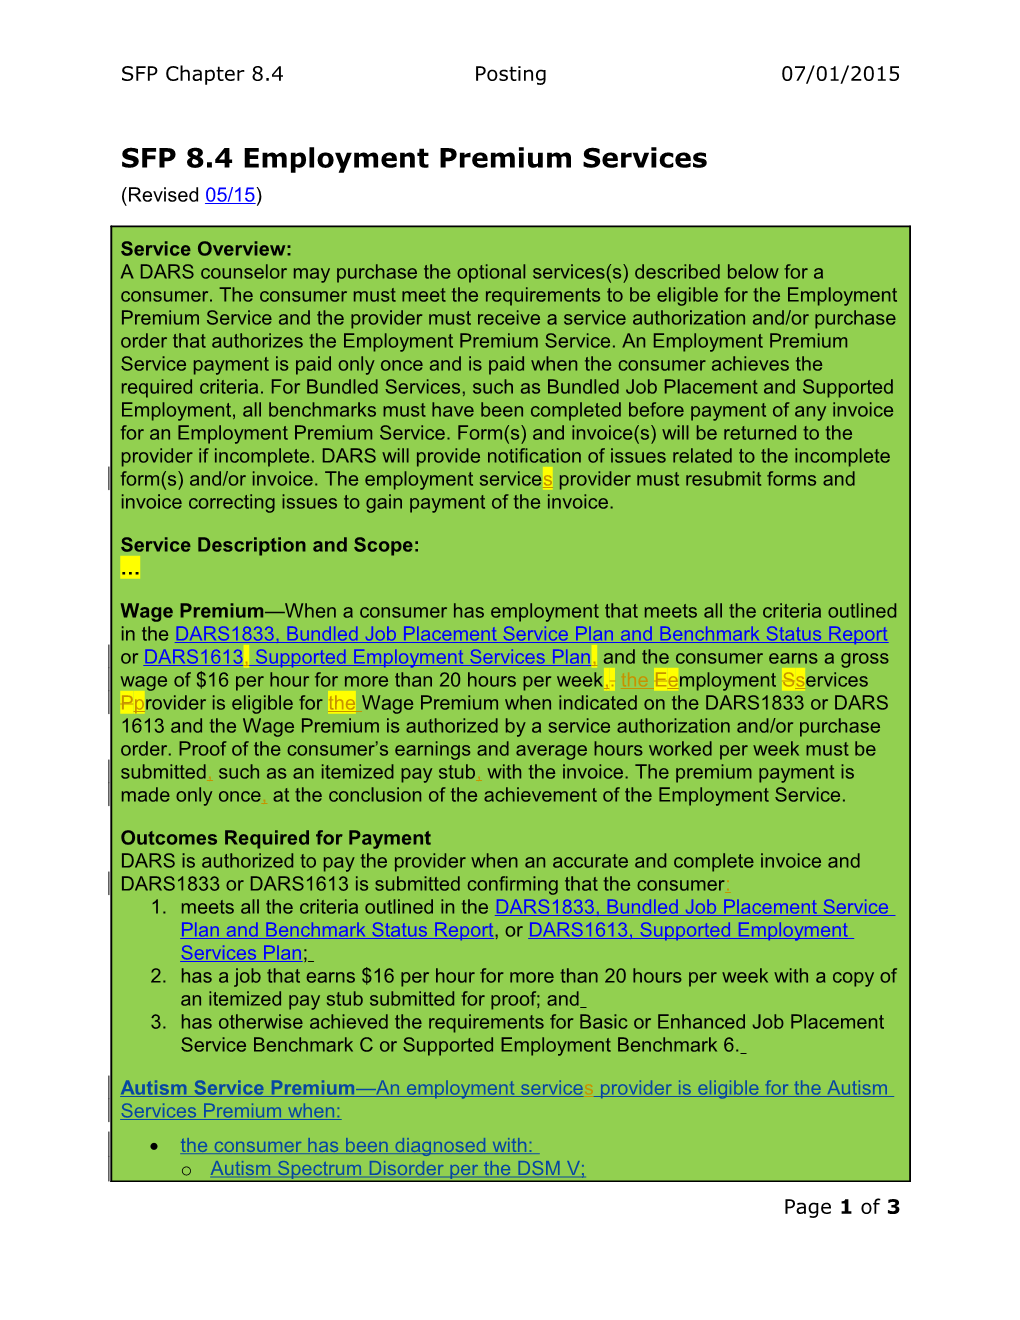 SFP 8.4 Employment Premium Services